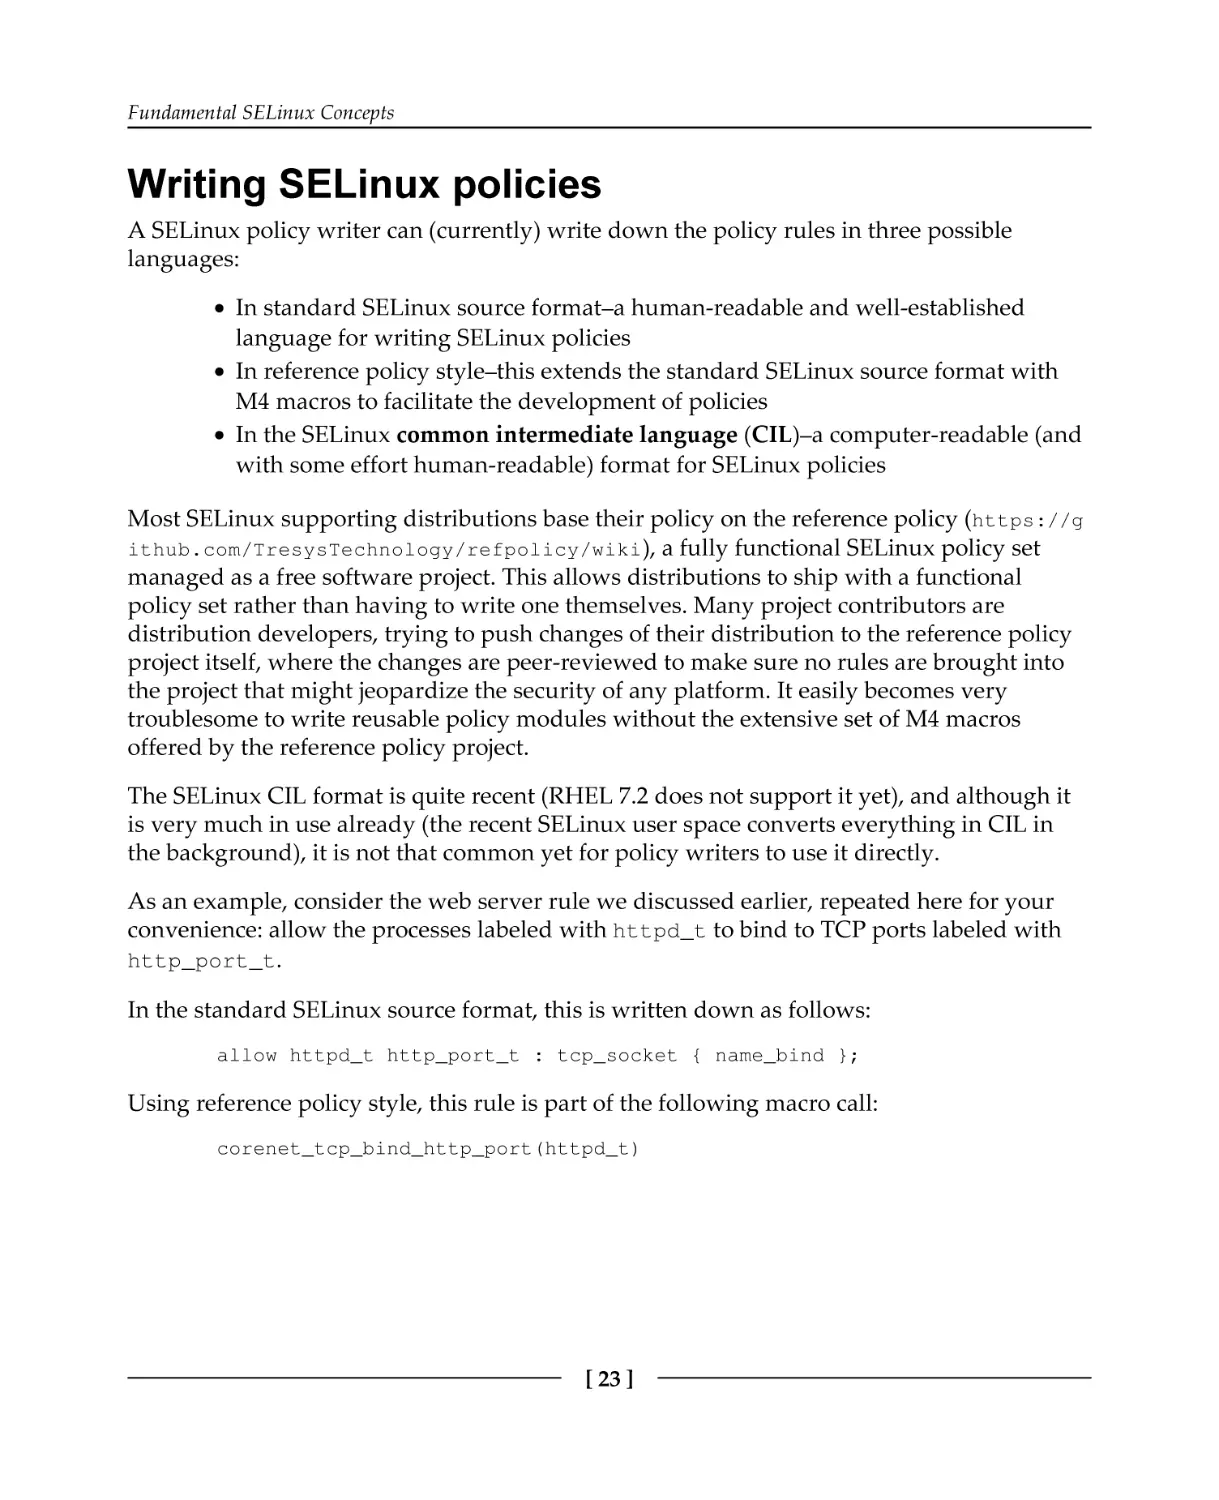 Writing SELinux policies